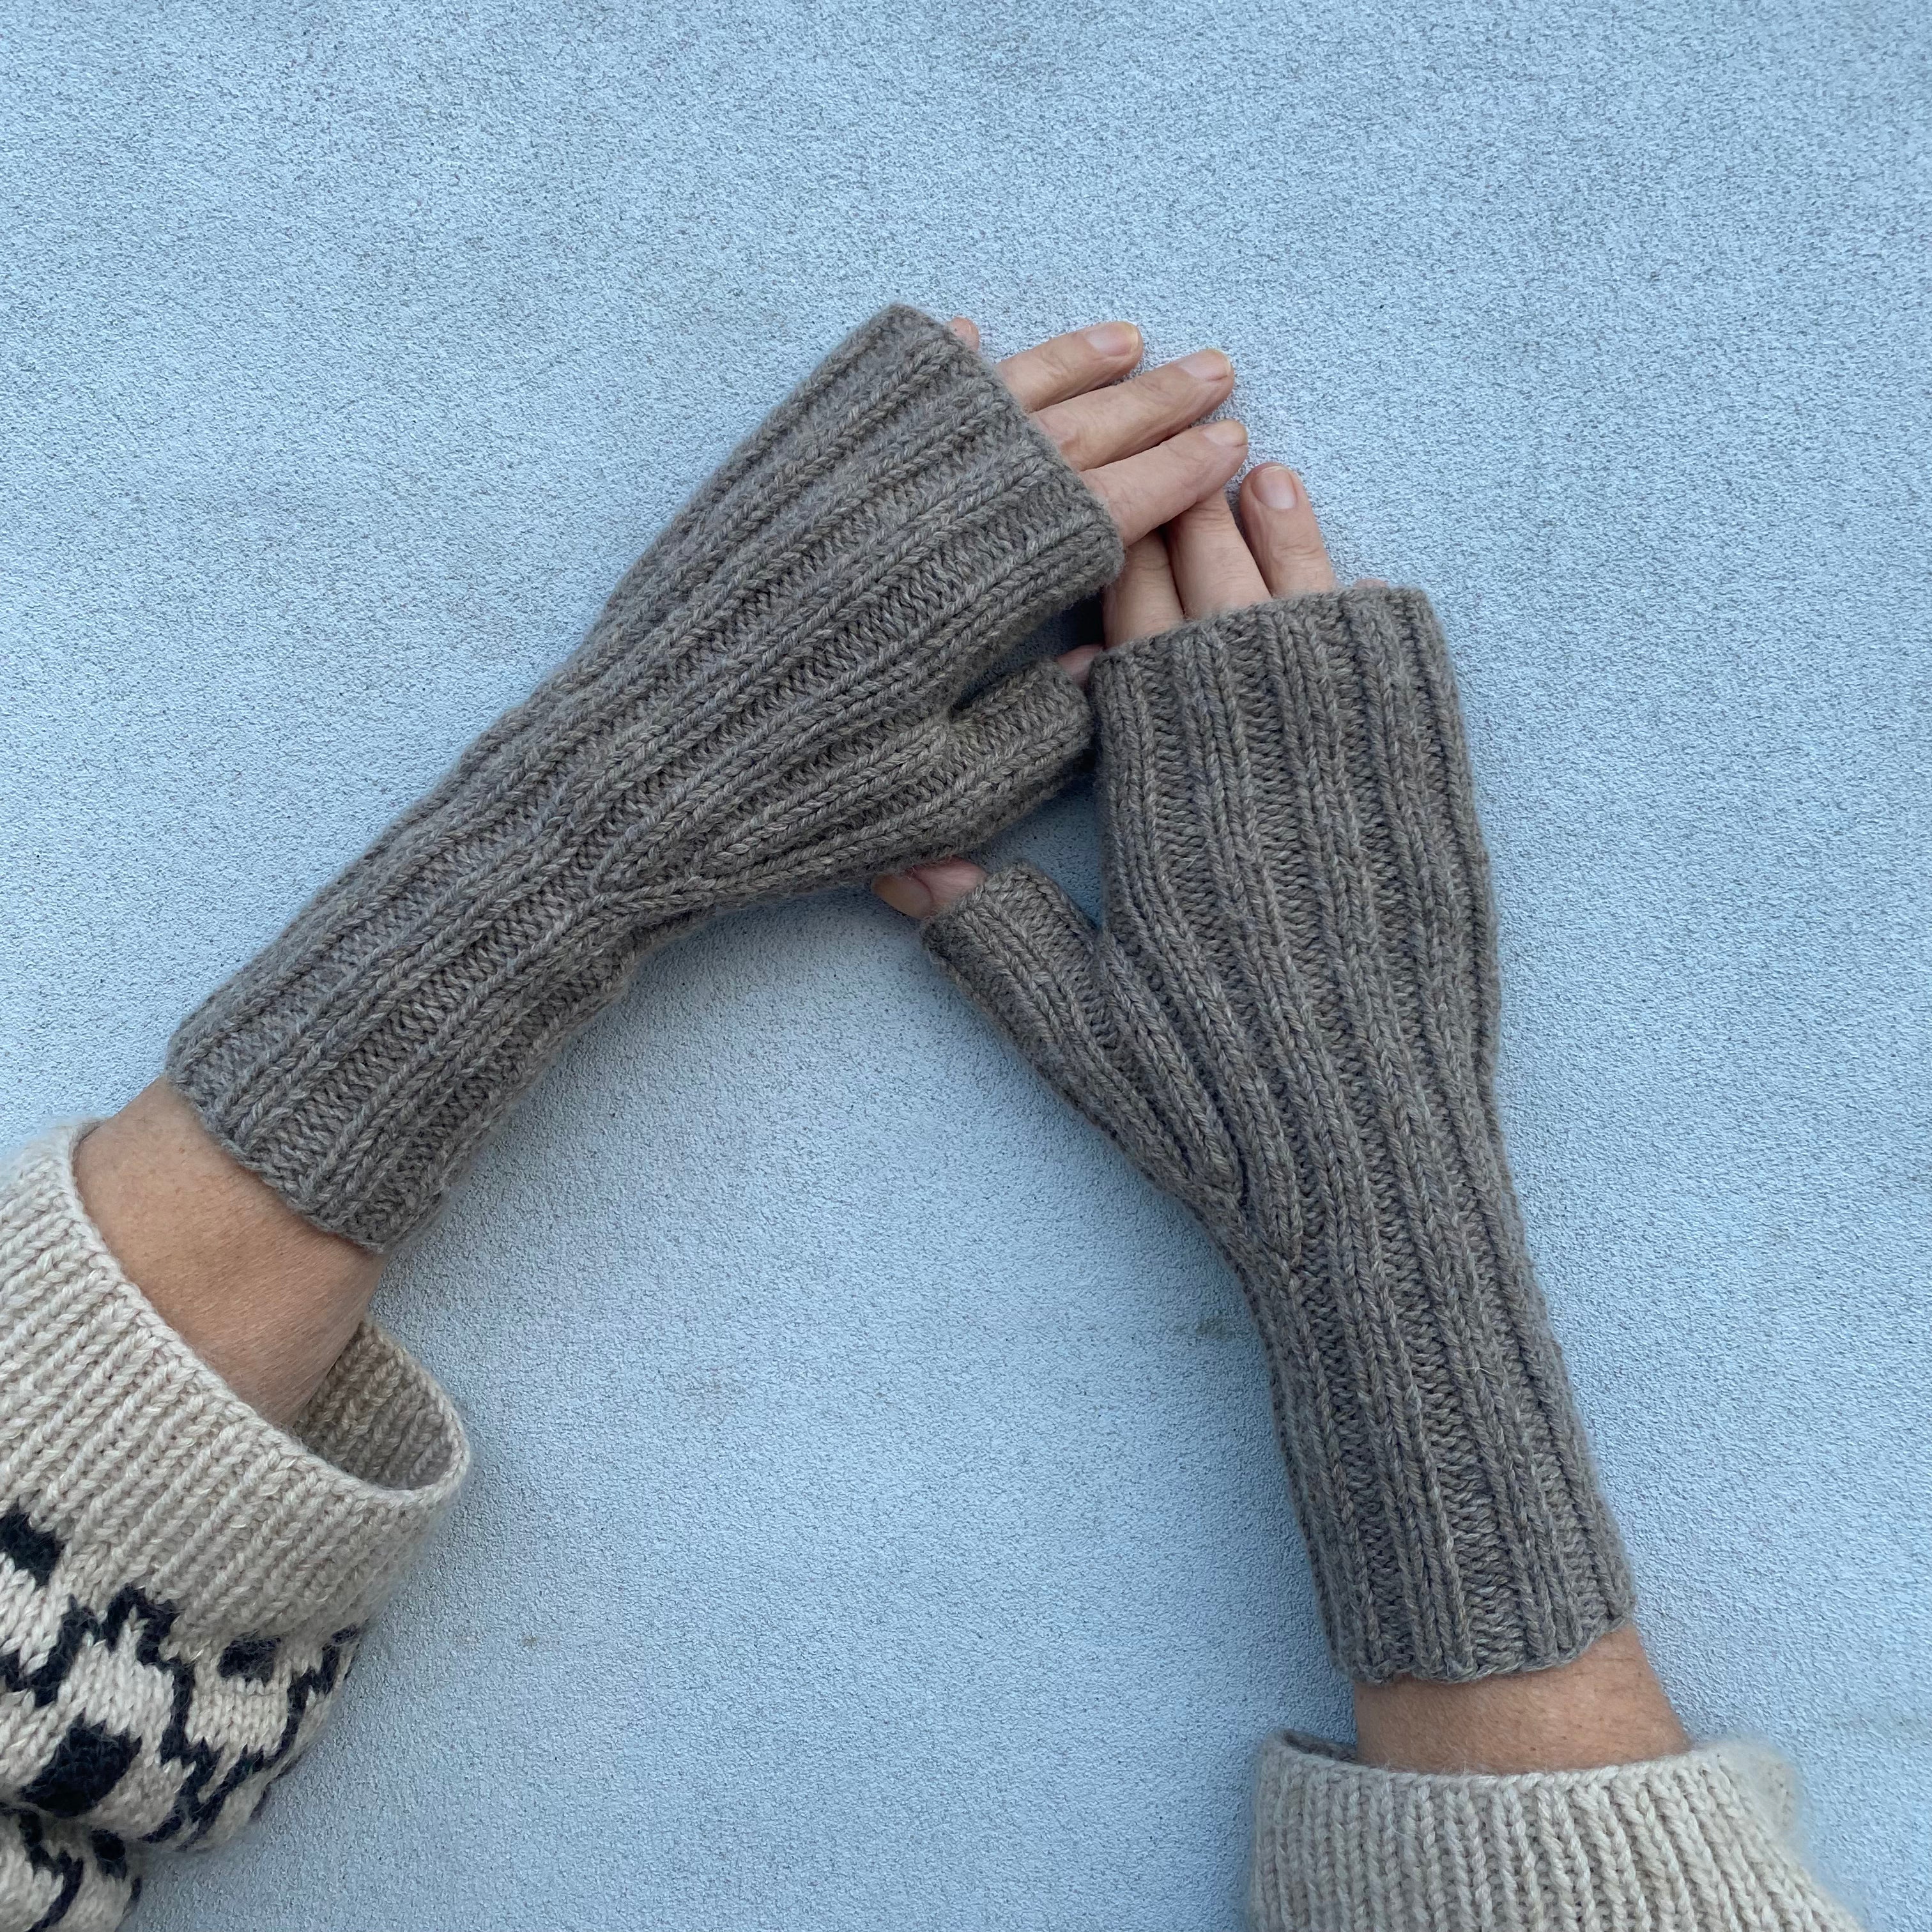 Nuuk Gloves